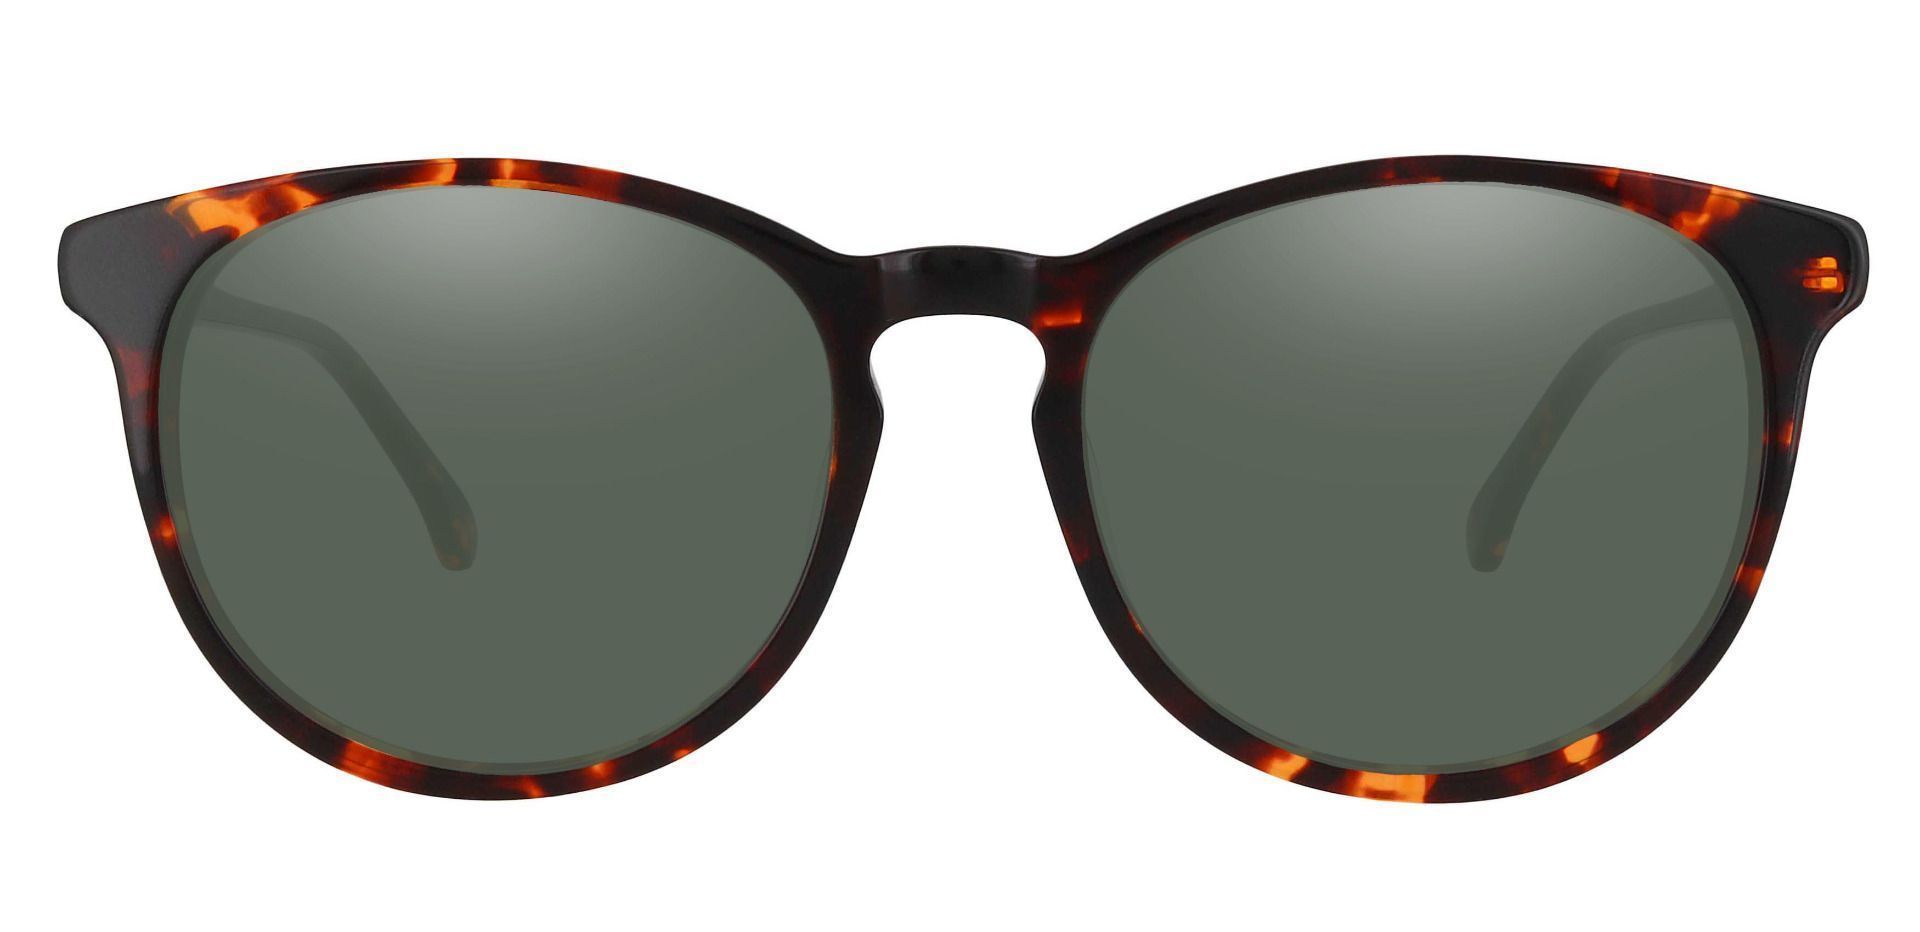 Carriage Round Progressive Sunglasses - Tortoise Frame With Gray Lenses ...